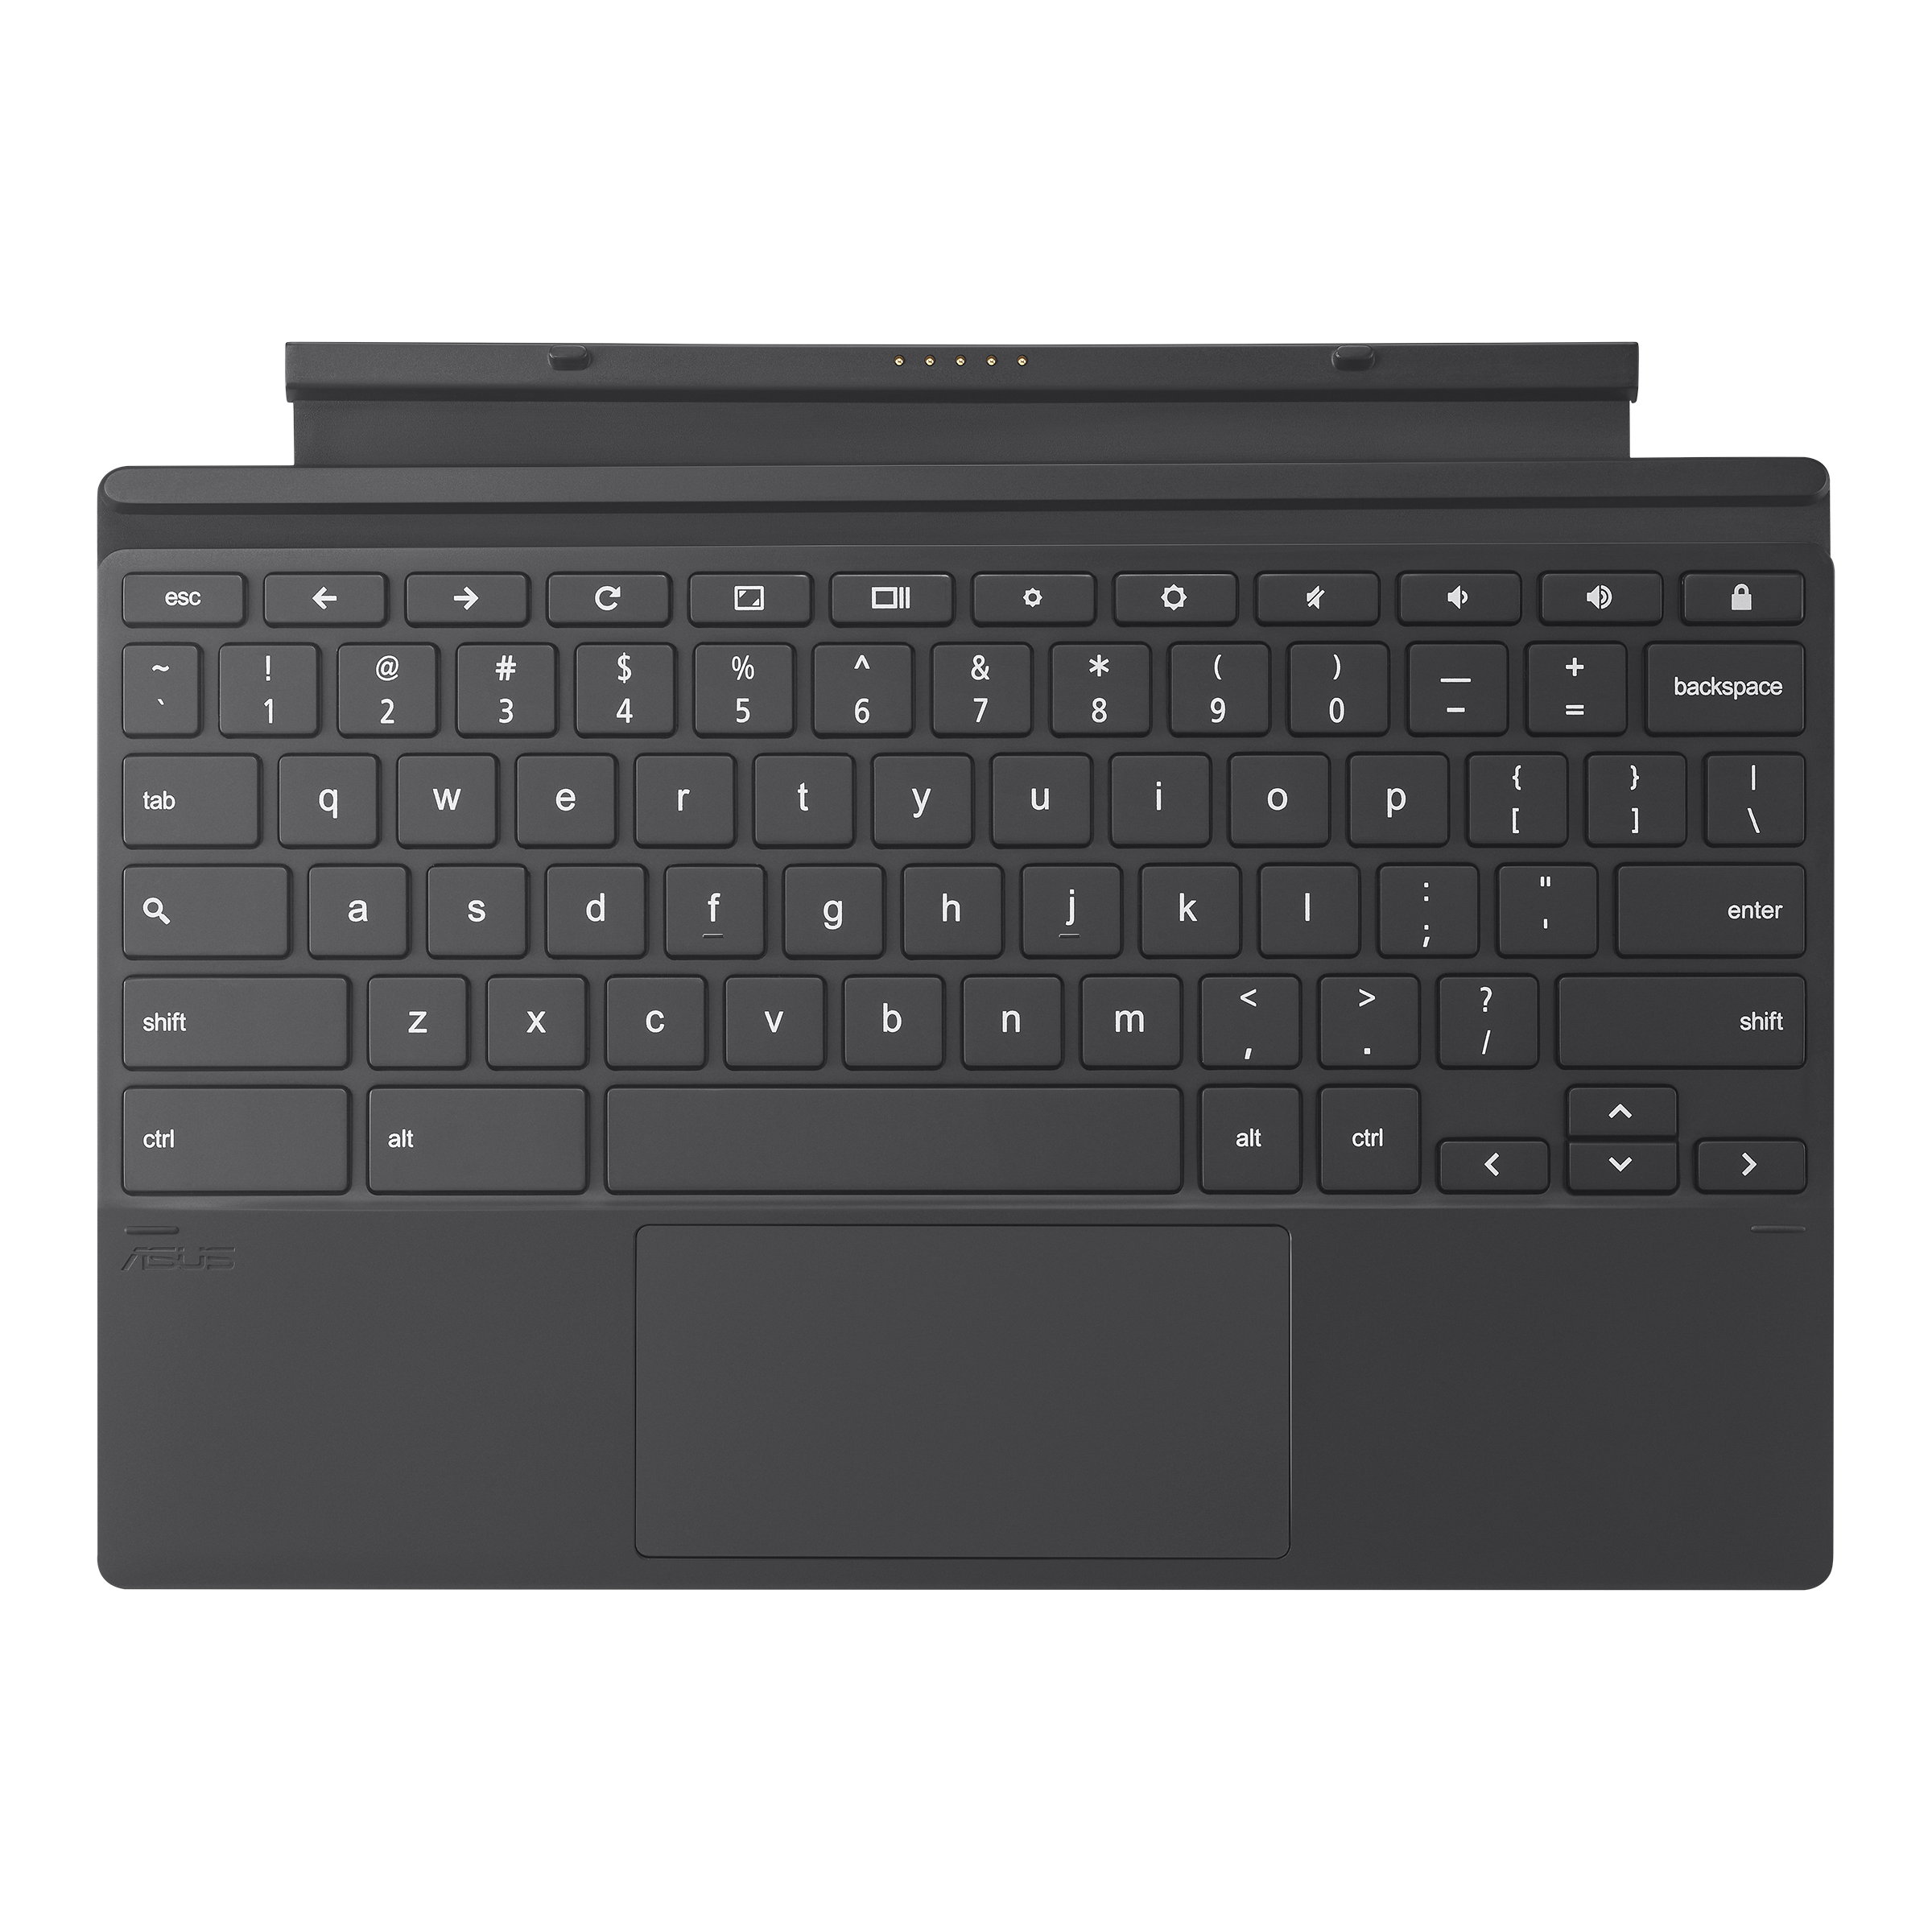 ASUS Chromebook Detachable CM3 CM3000｜筆記型電腦家用｜ASUS 台灣